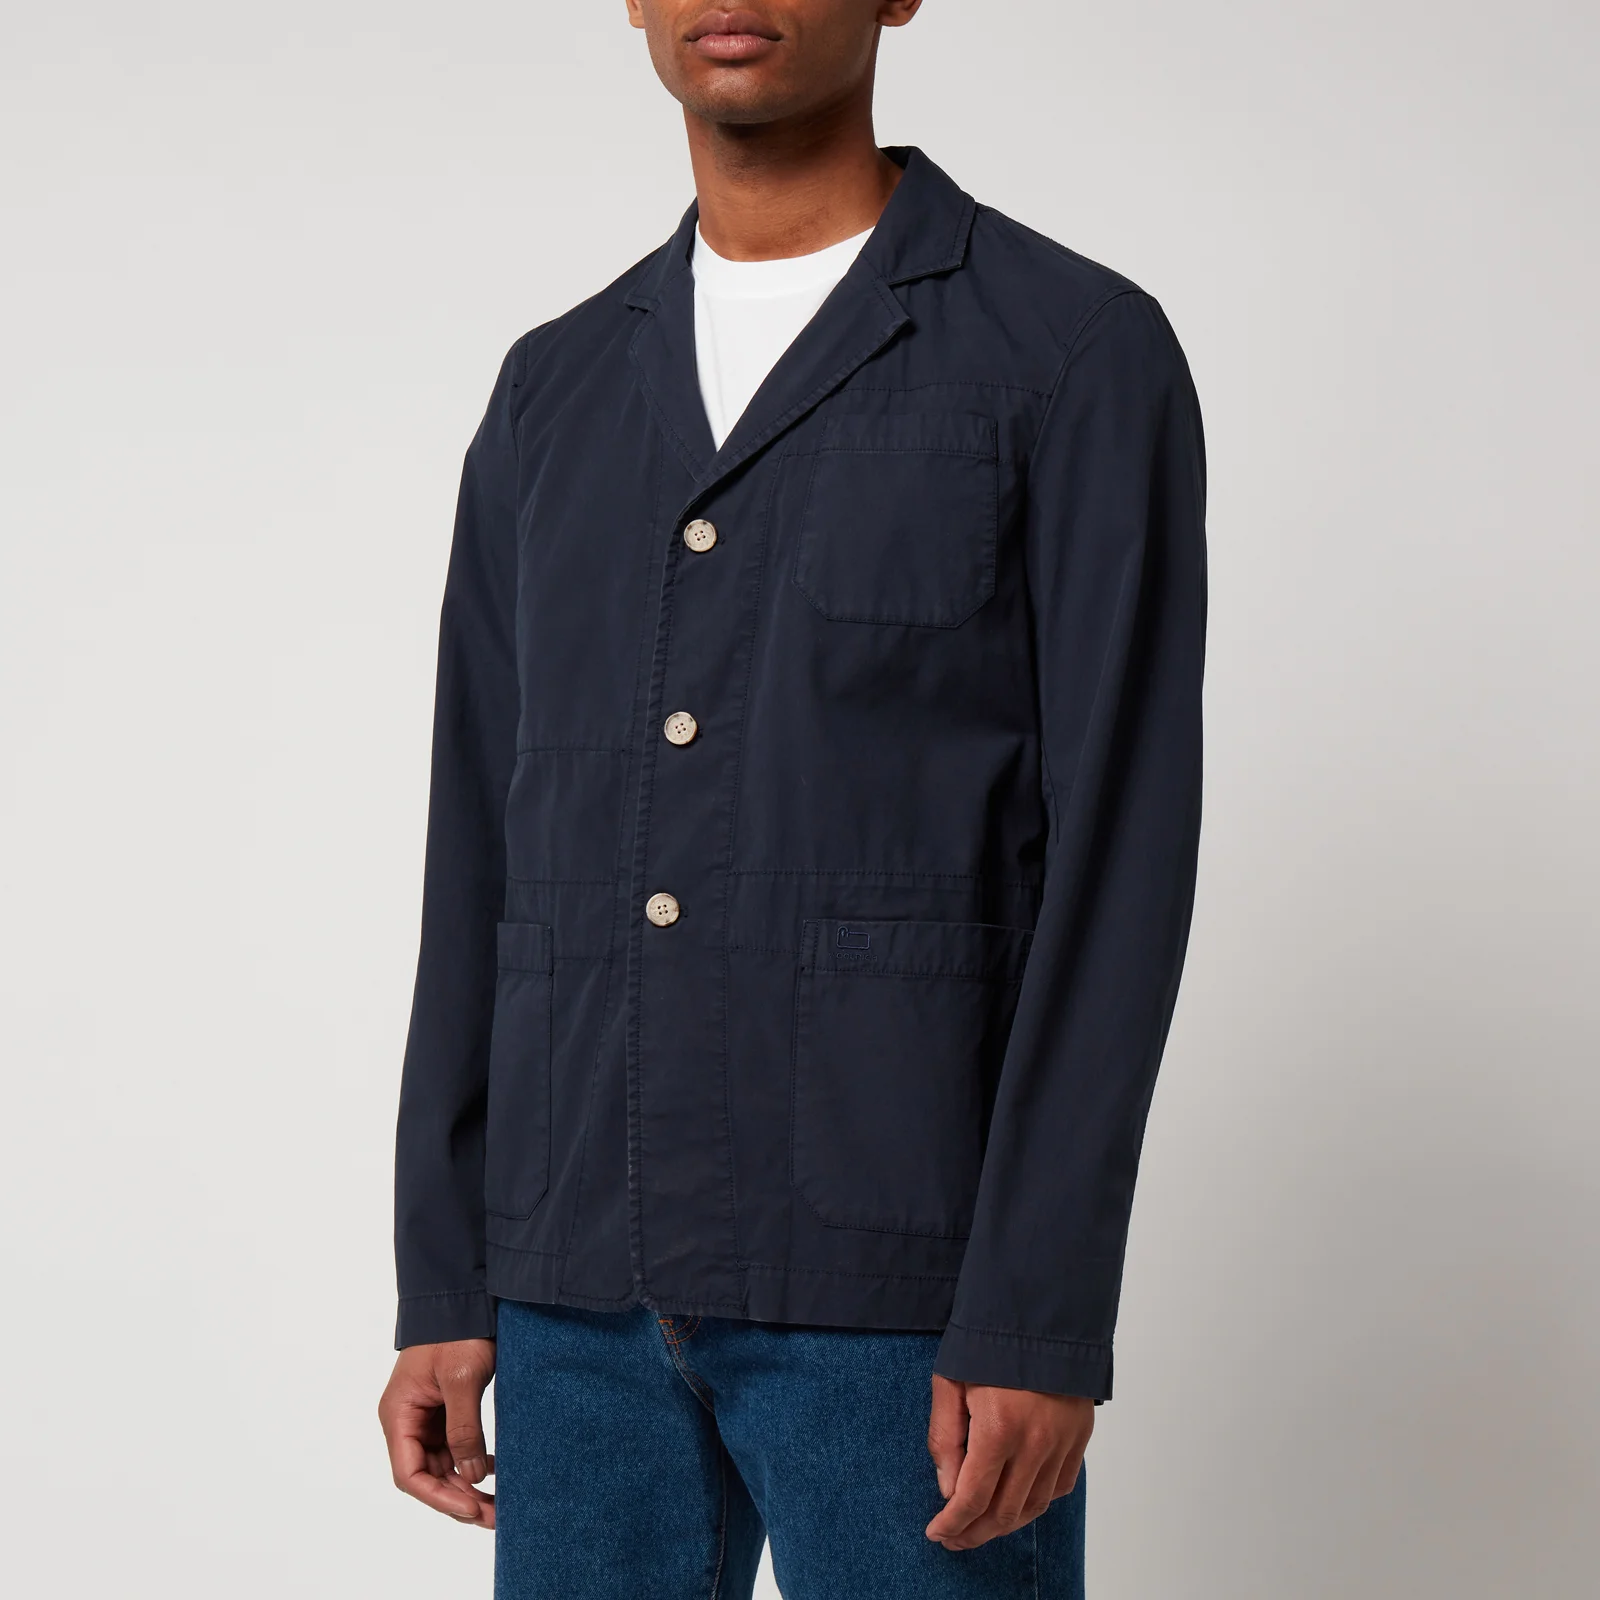 Woolrich Men's Military Cotton Blazer - Melton Blue Image 1